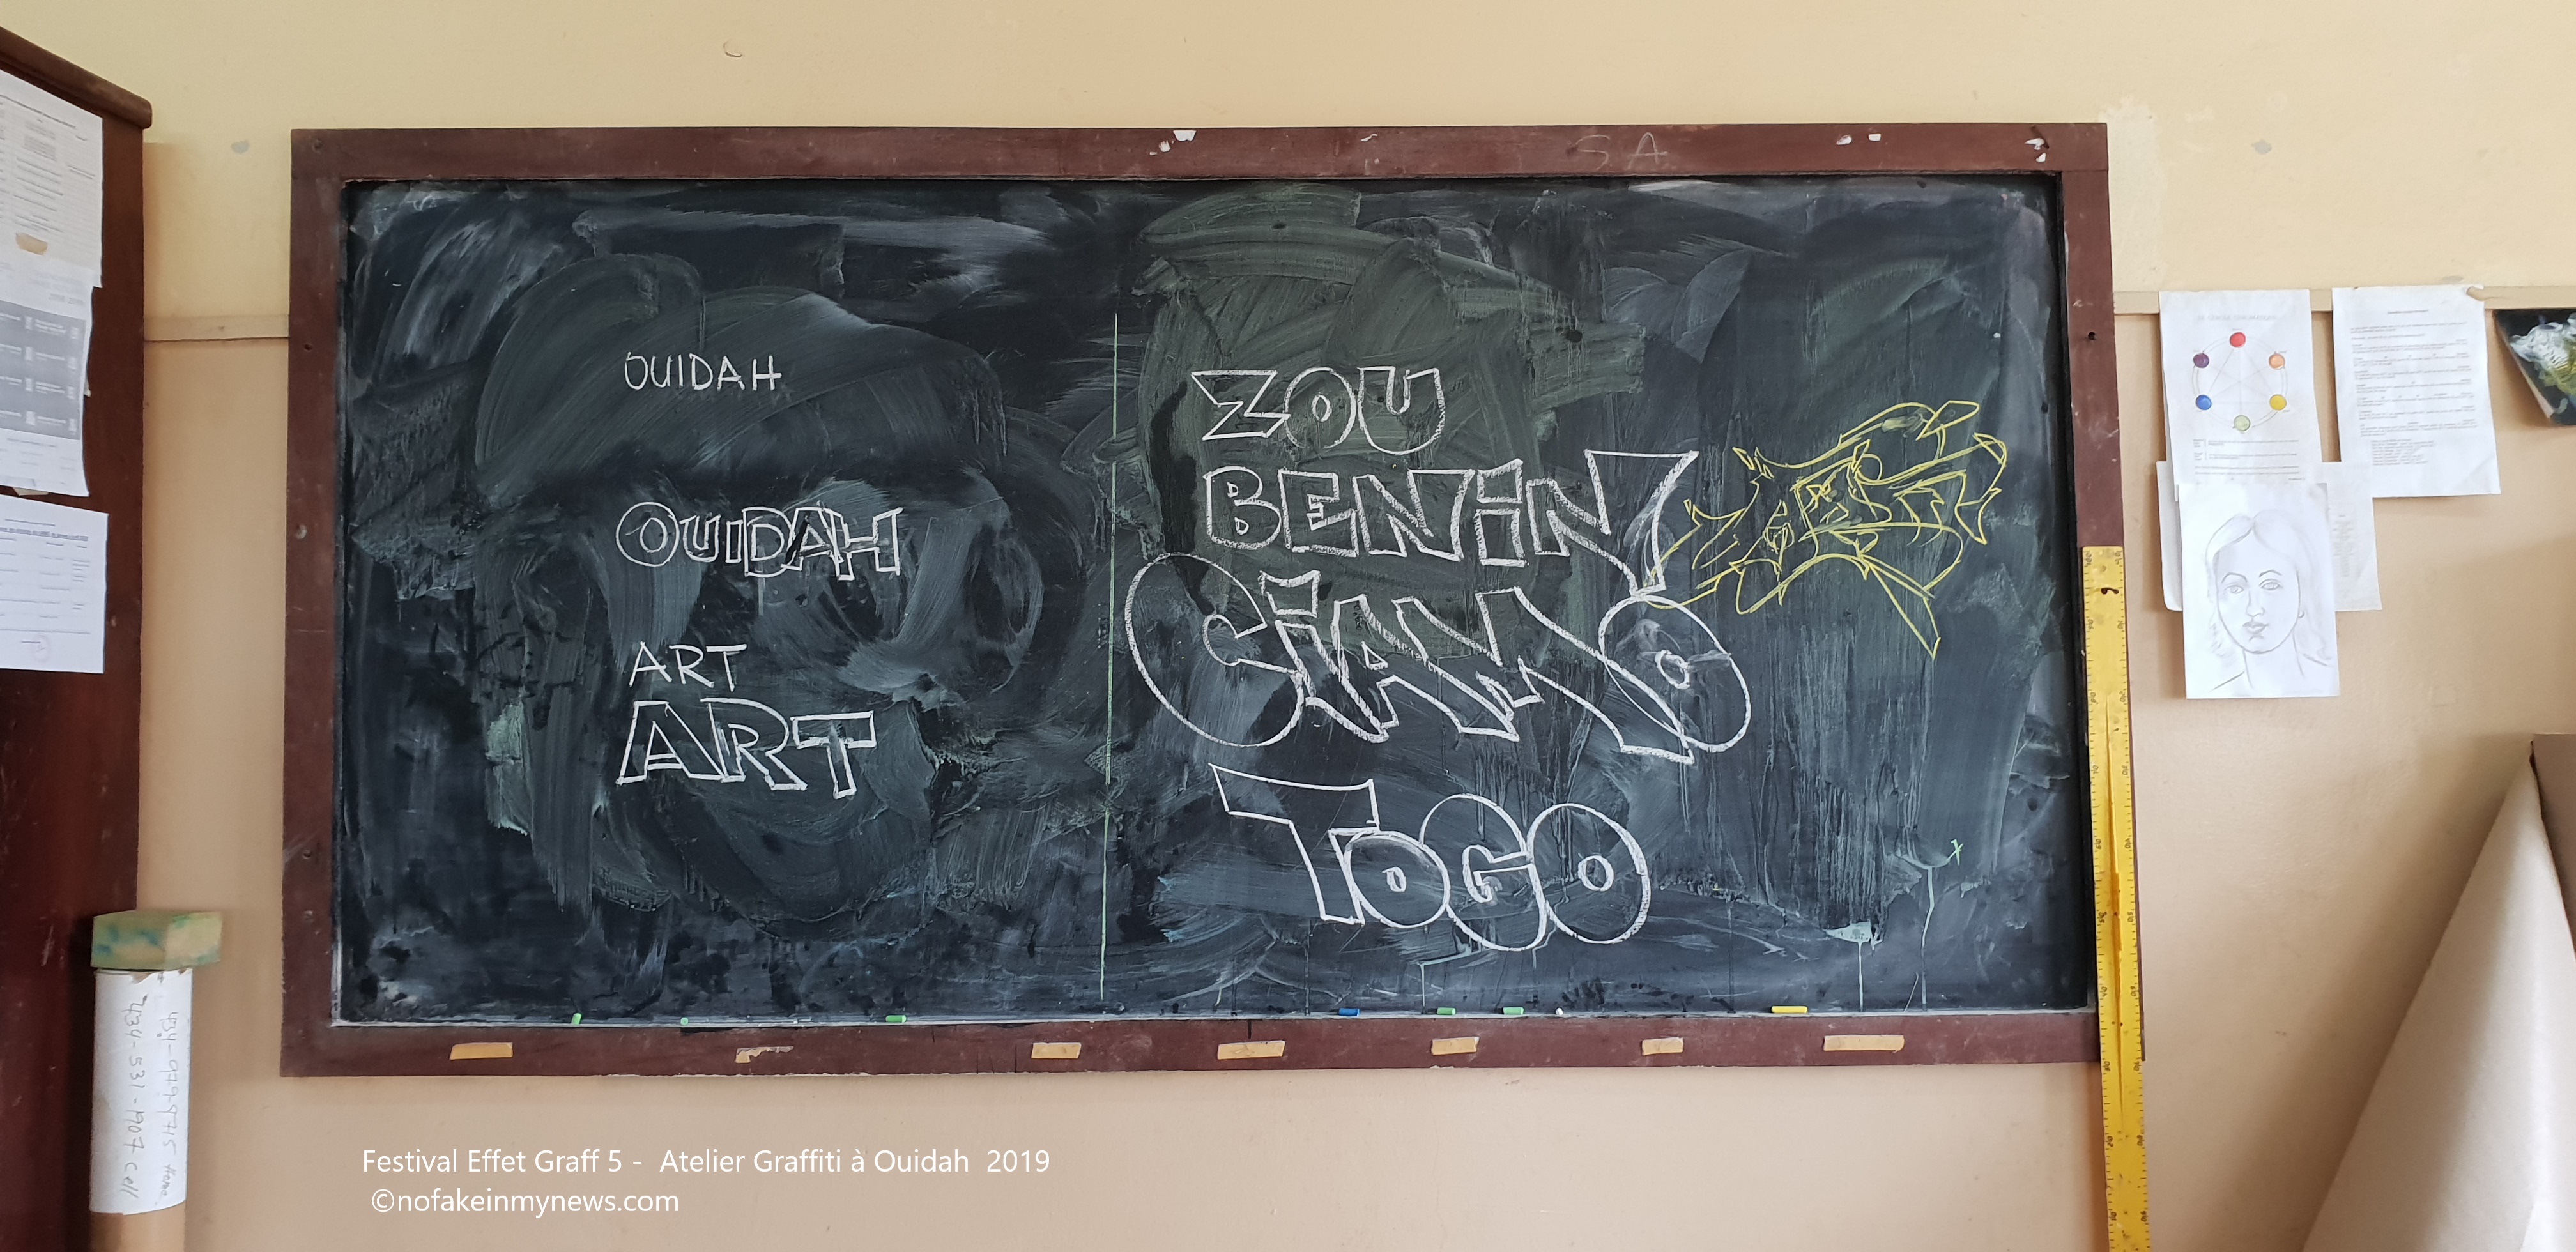 Festival Effet Graff 5 - Atelier Graffiti à Ouidah 2019 ©nofakeinmynews